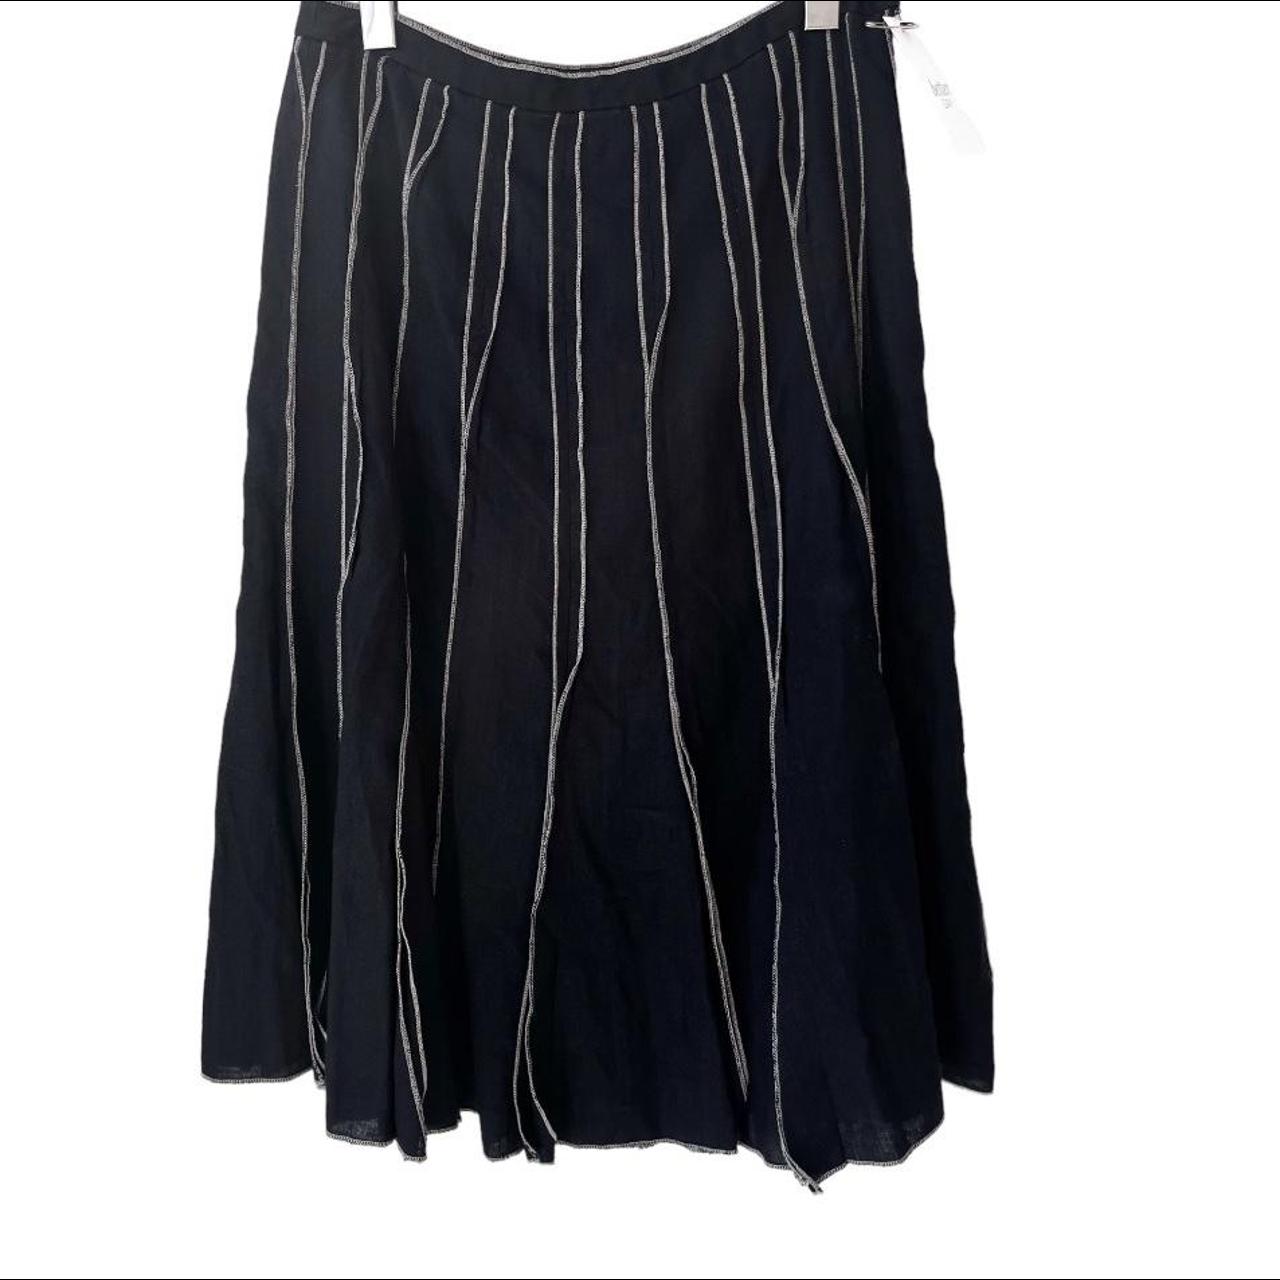 Carole Little 100% Linen Accordion Pleated Skirt